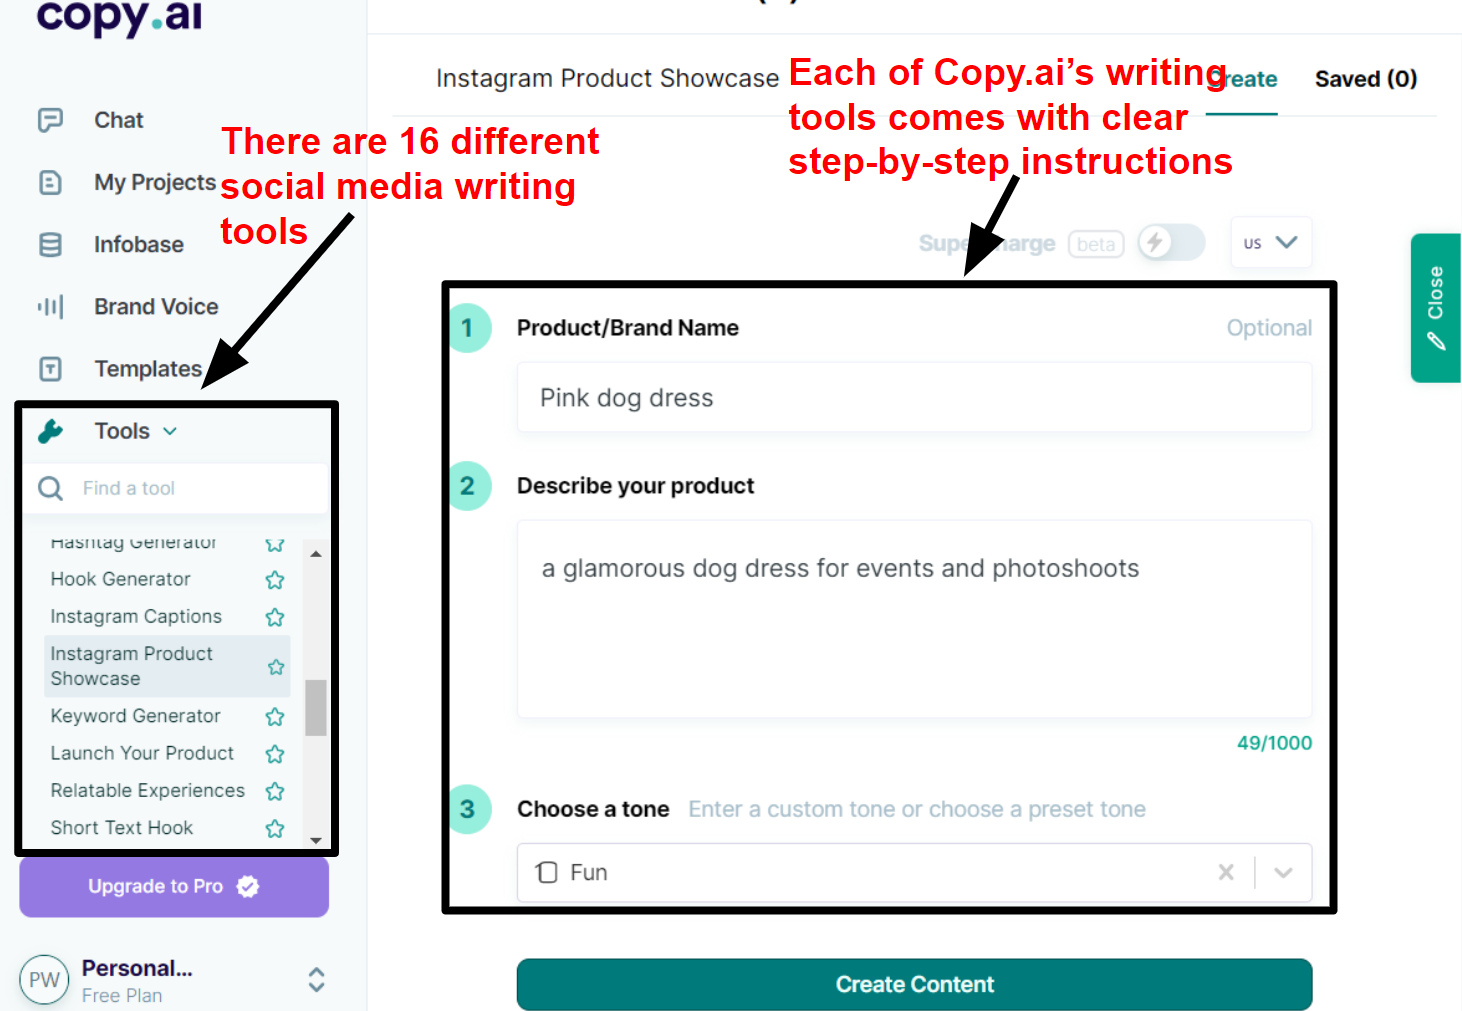 Copy.ai Instagram Product Showcase writing tool